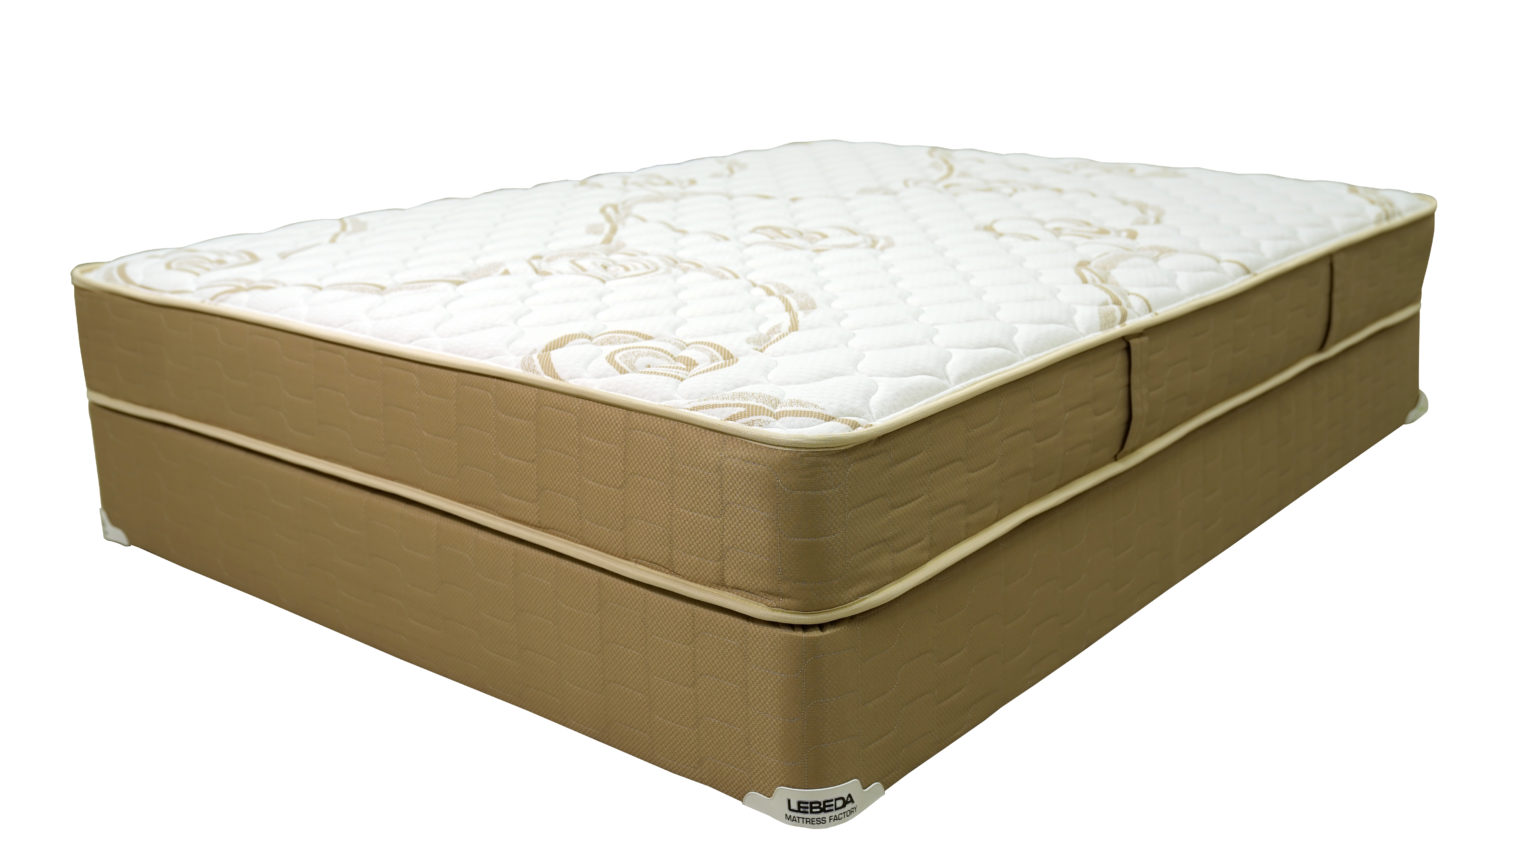 lebeda mattress protector warranty